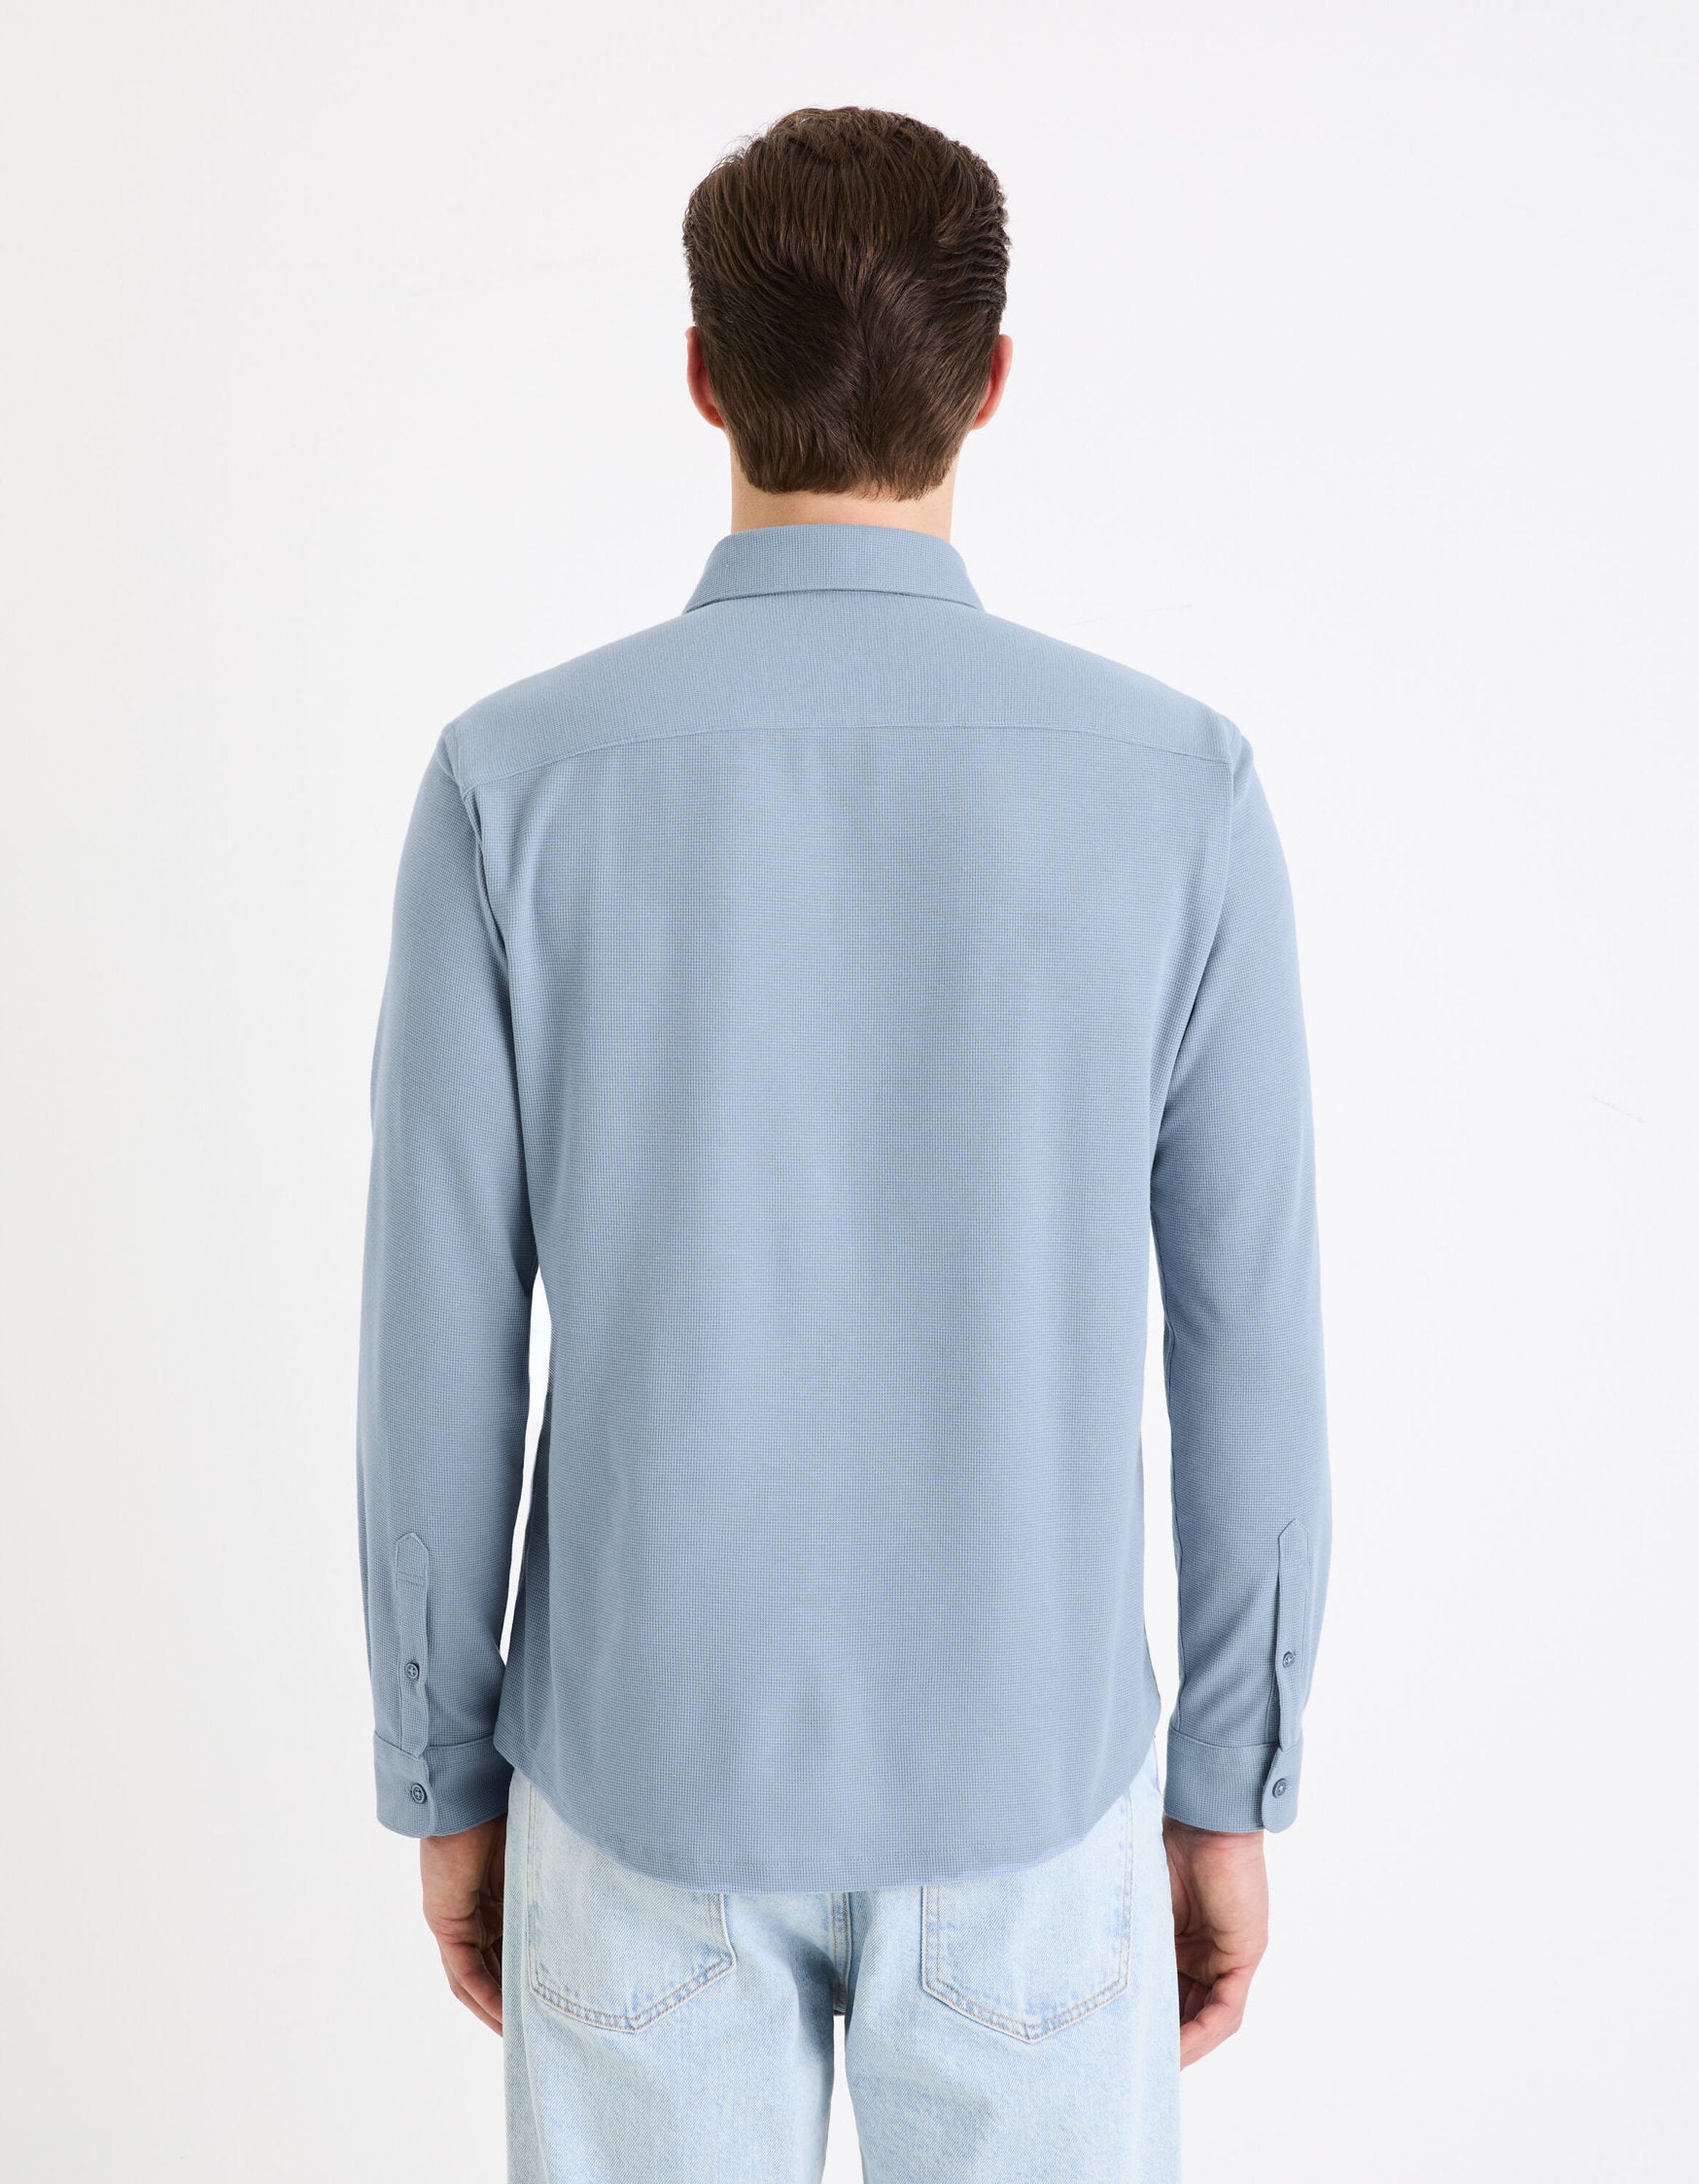 Regular Plain Embossed Shirt_GAWAFFLE_LIGHT BLUE_04